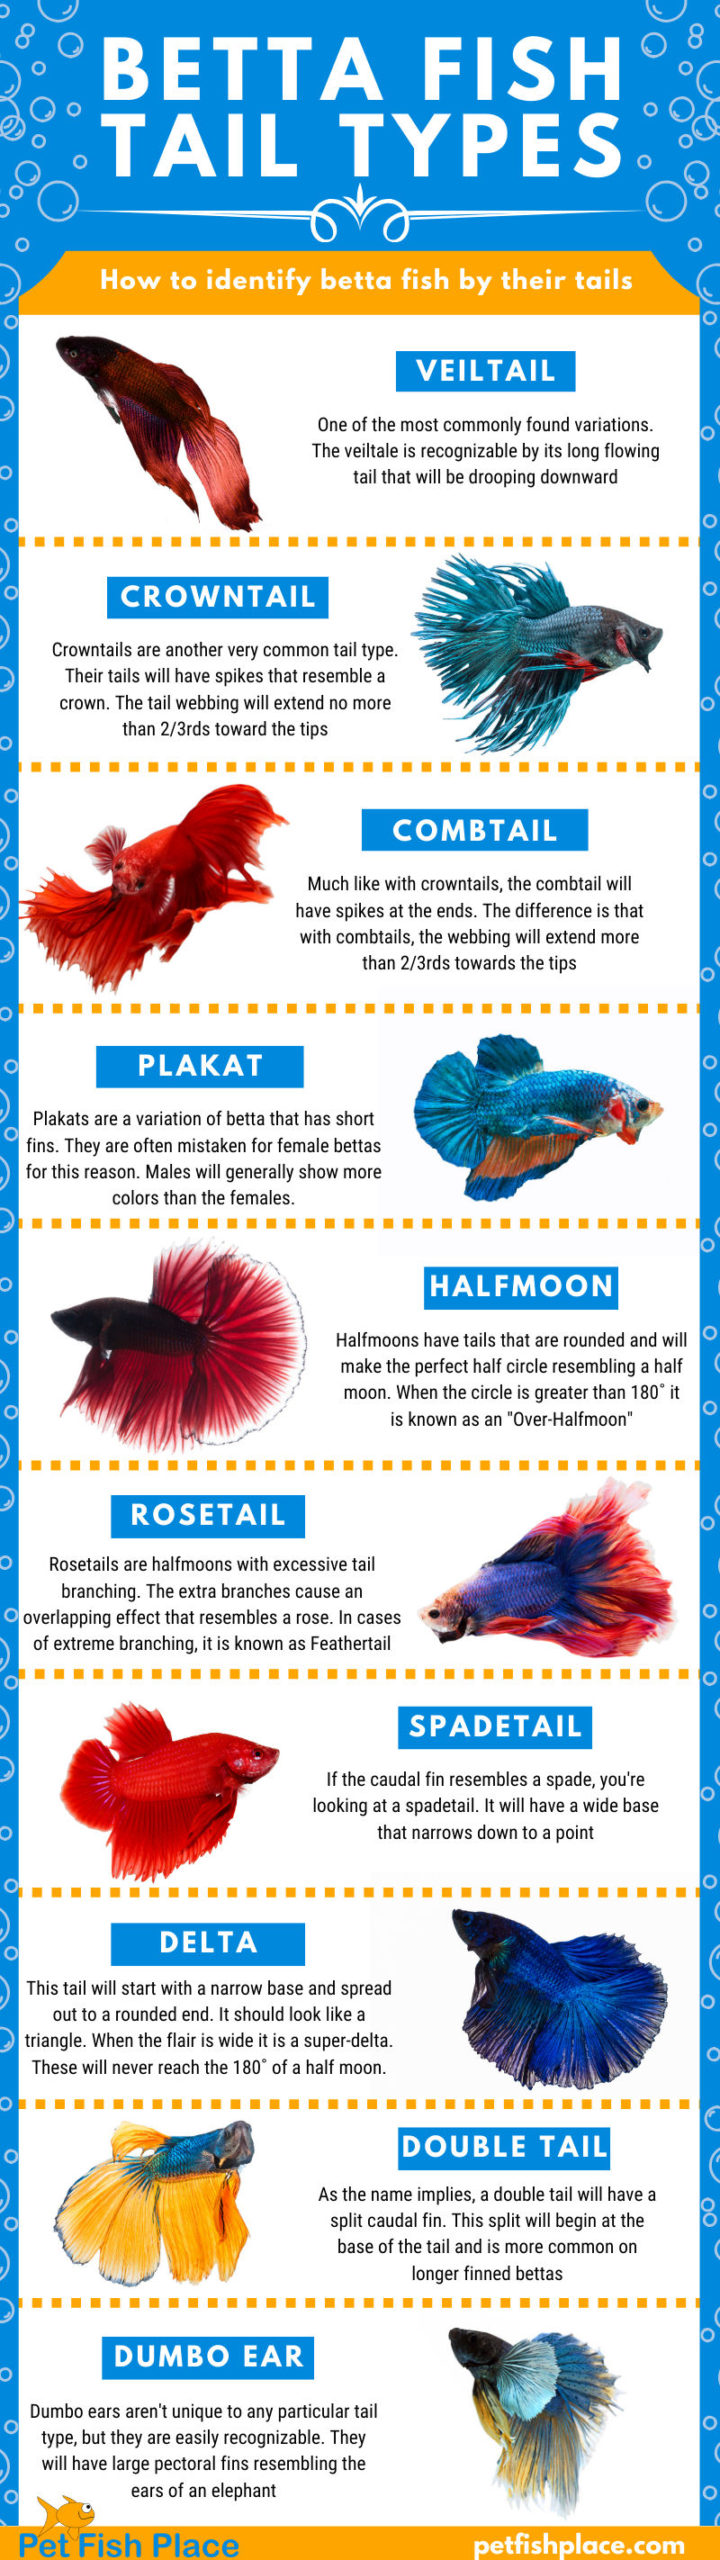 Betta fish tail types Infographic